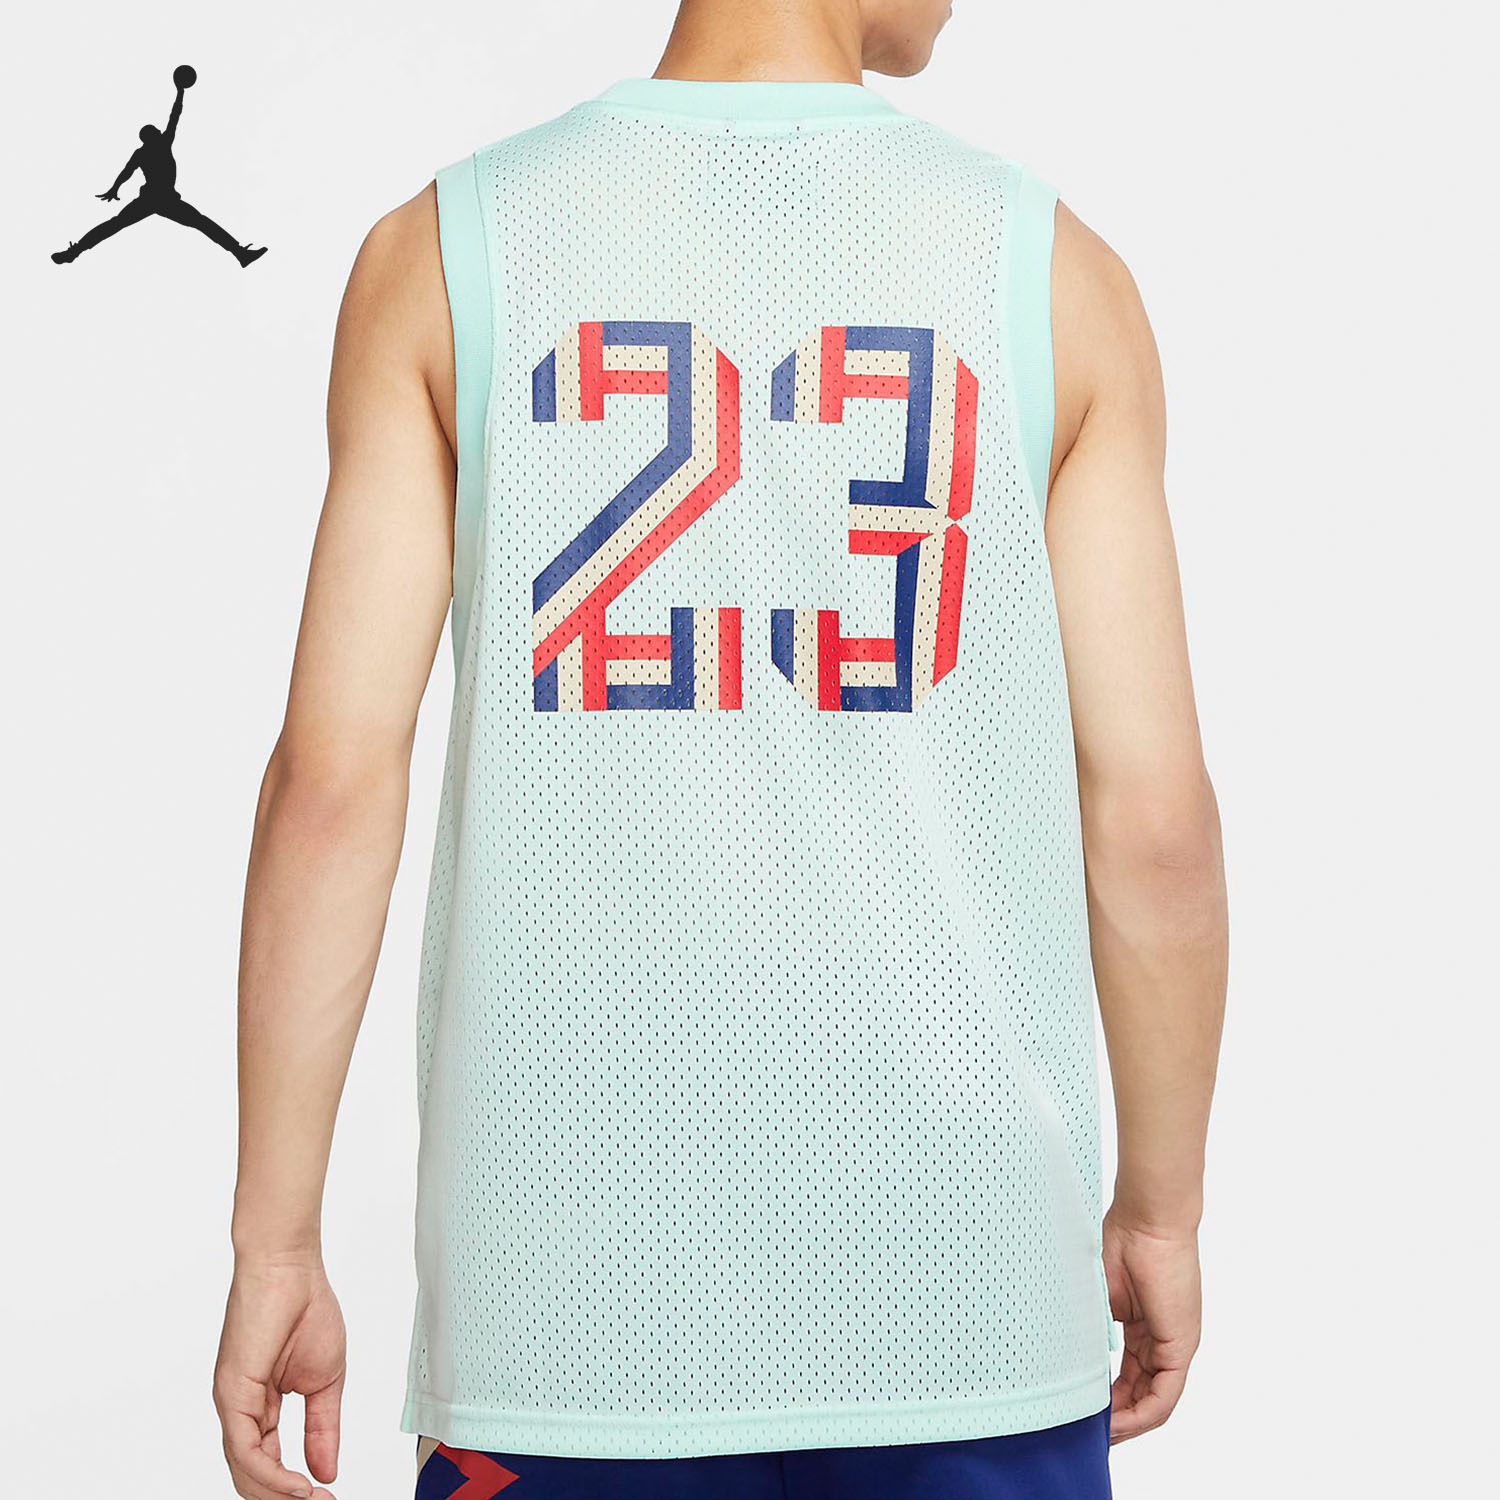 NIKE/耐克正品 JORDAN SPORT DNA 男子休闲运动篮球球衣 CK9591 - 图0